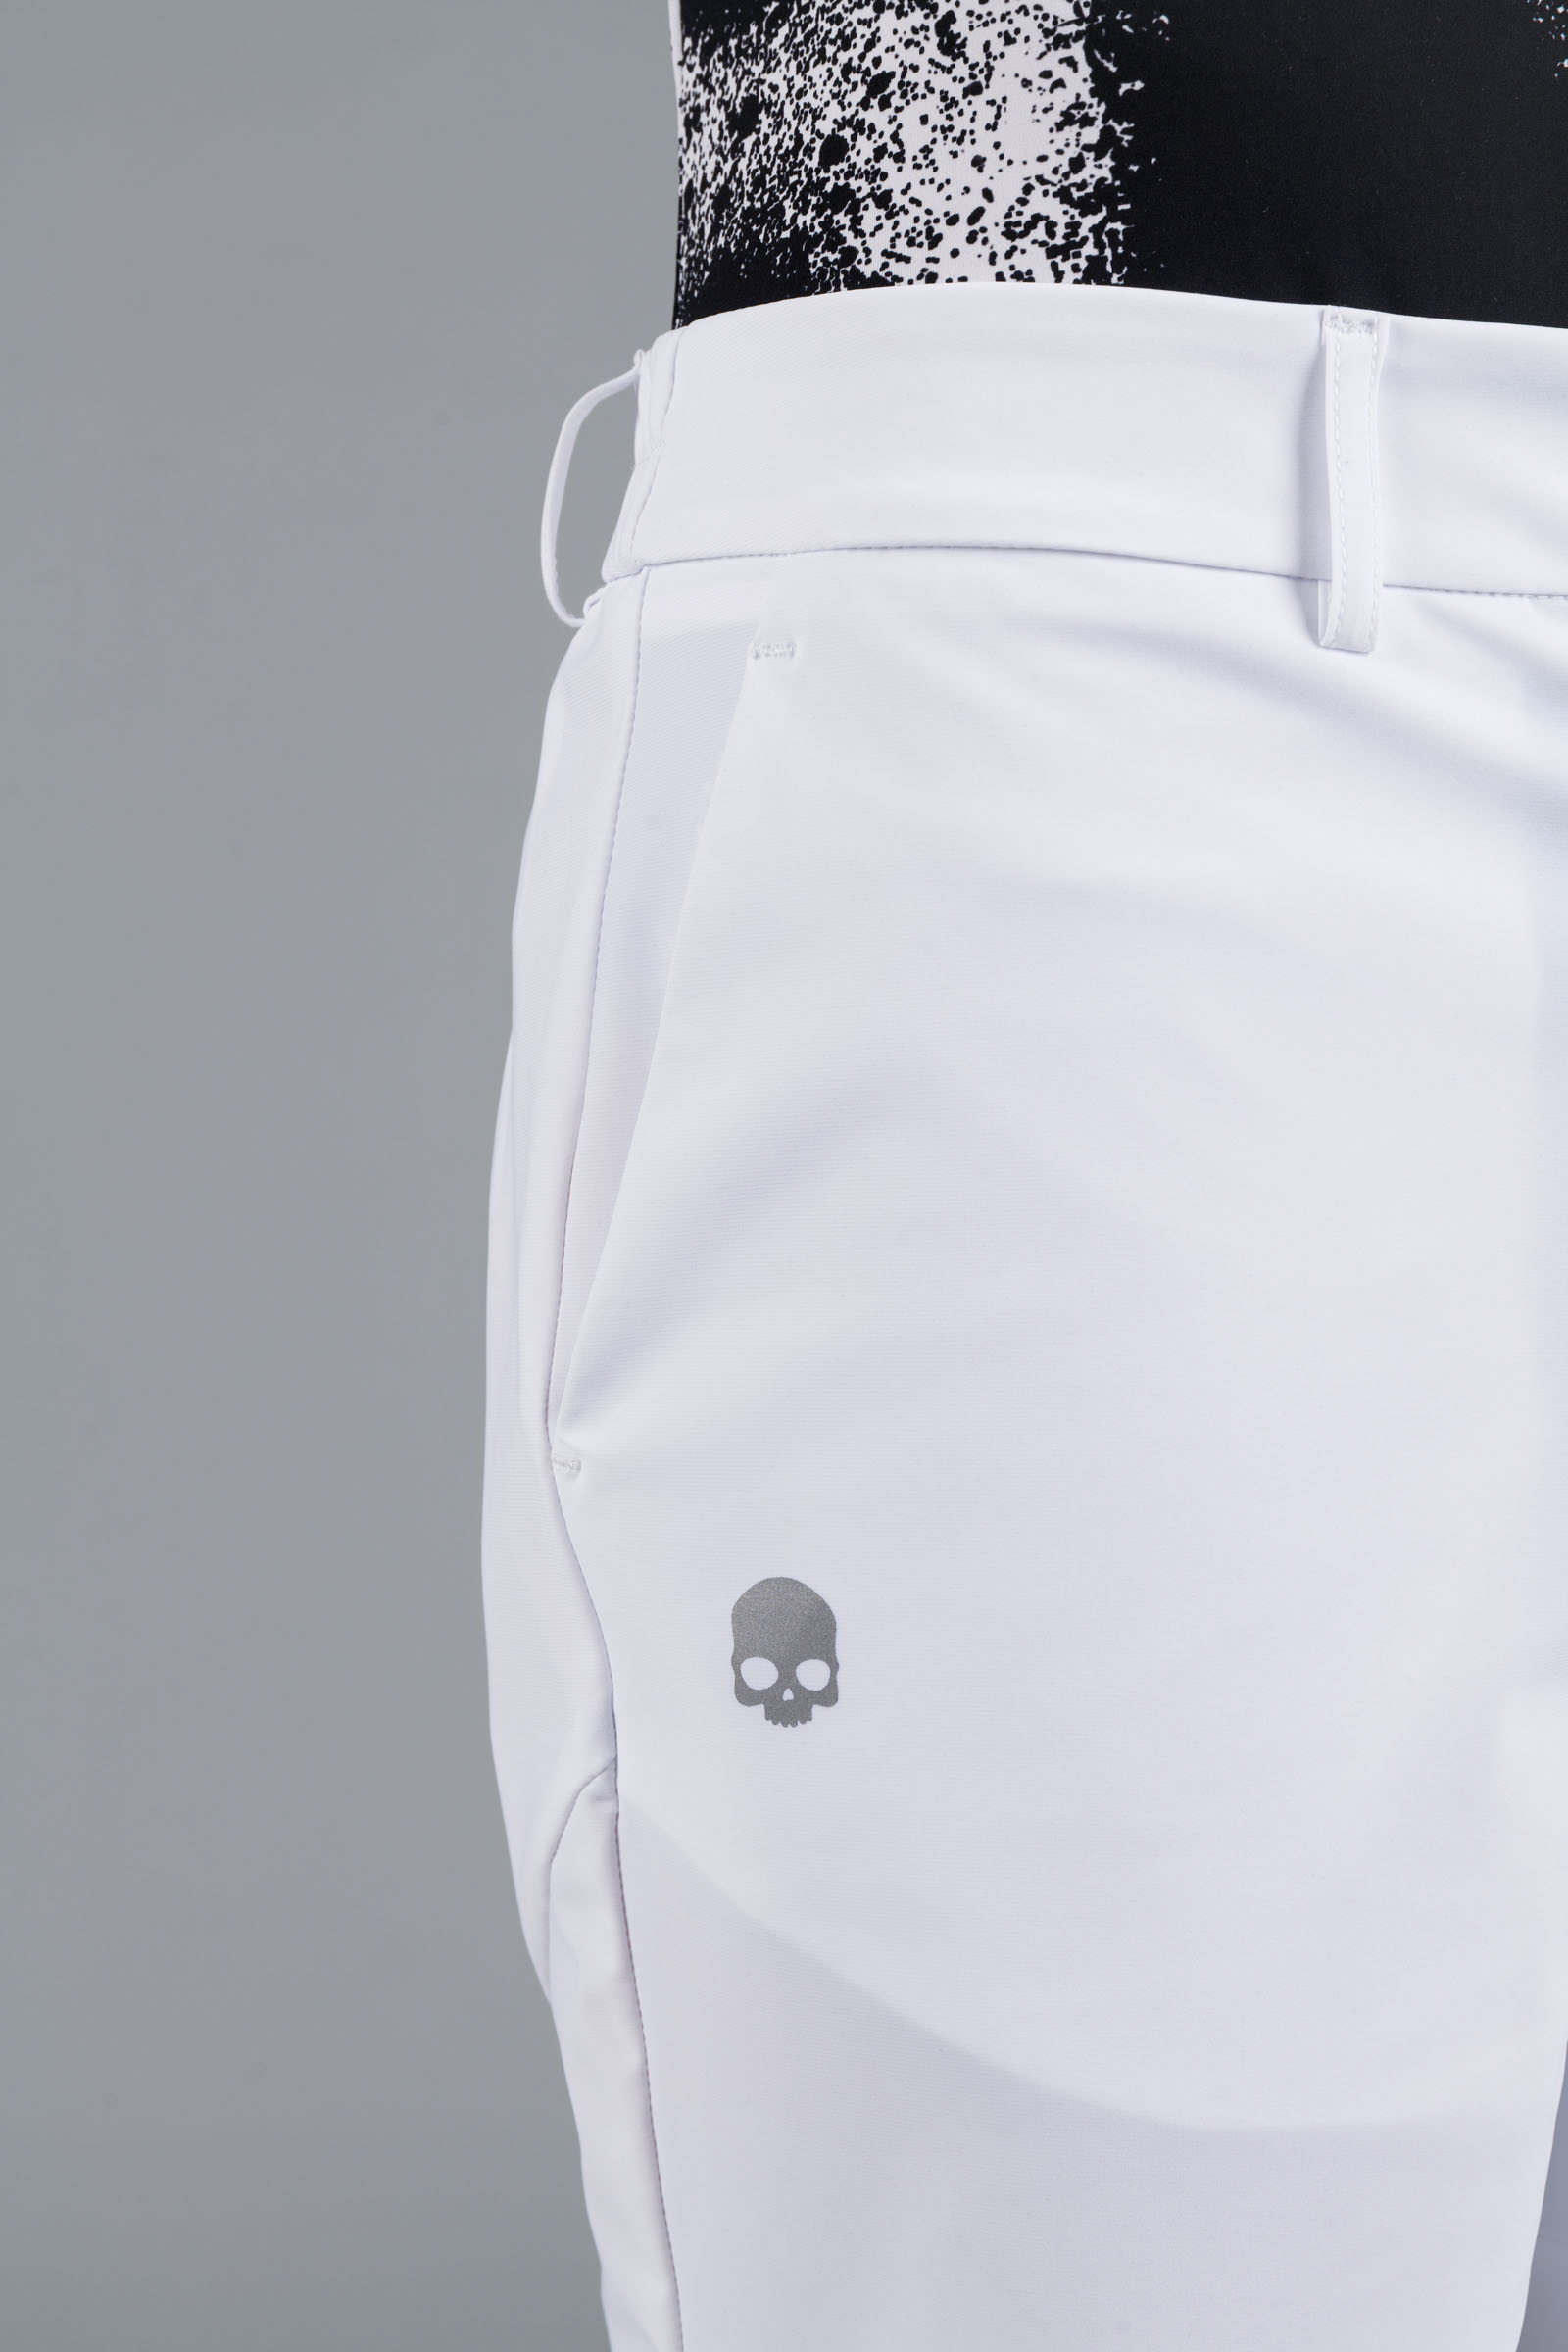 GOLF SHORTS - WHITE - Abbigliamento sportivo | Hydrogen